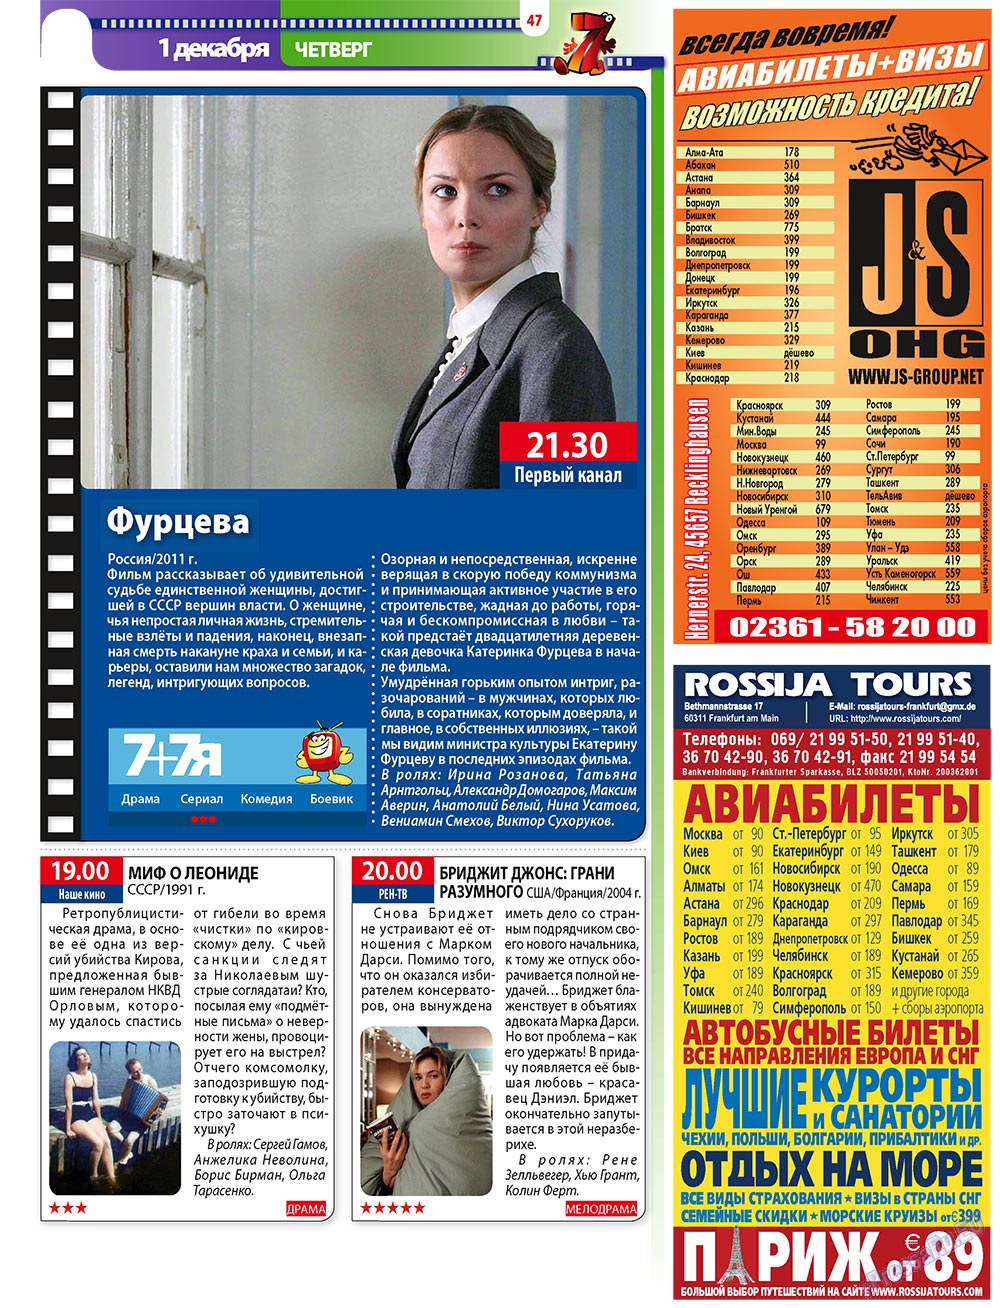 7плюс7я (журнал). 2011 год, номер 47, стр. 47